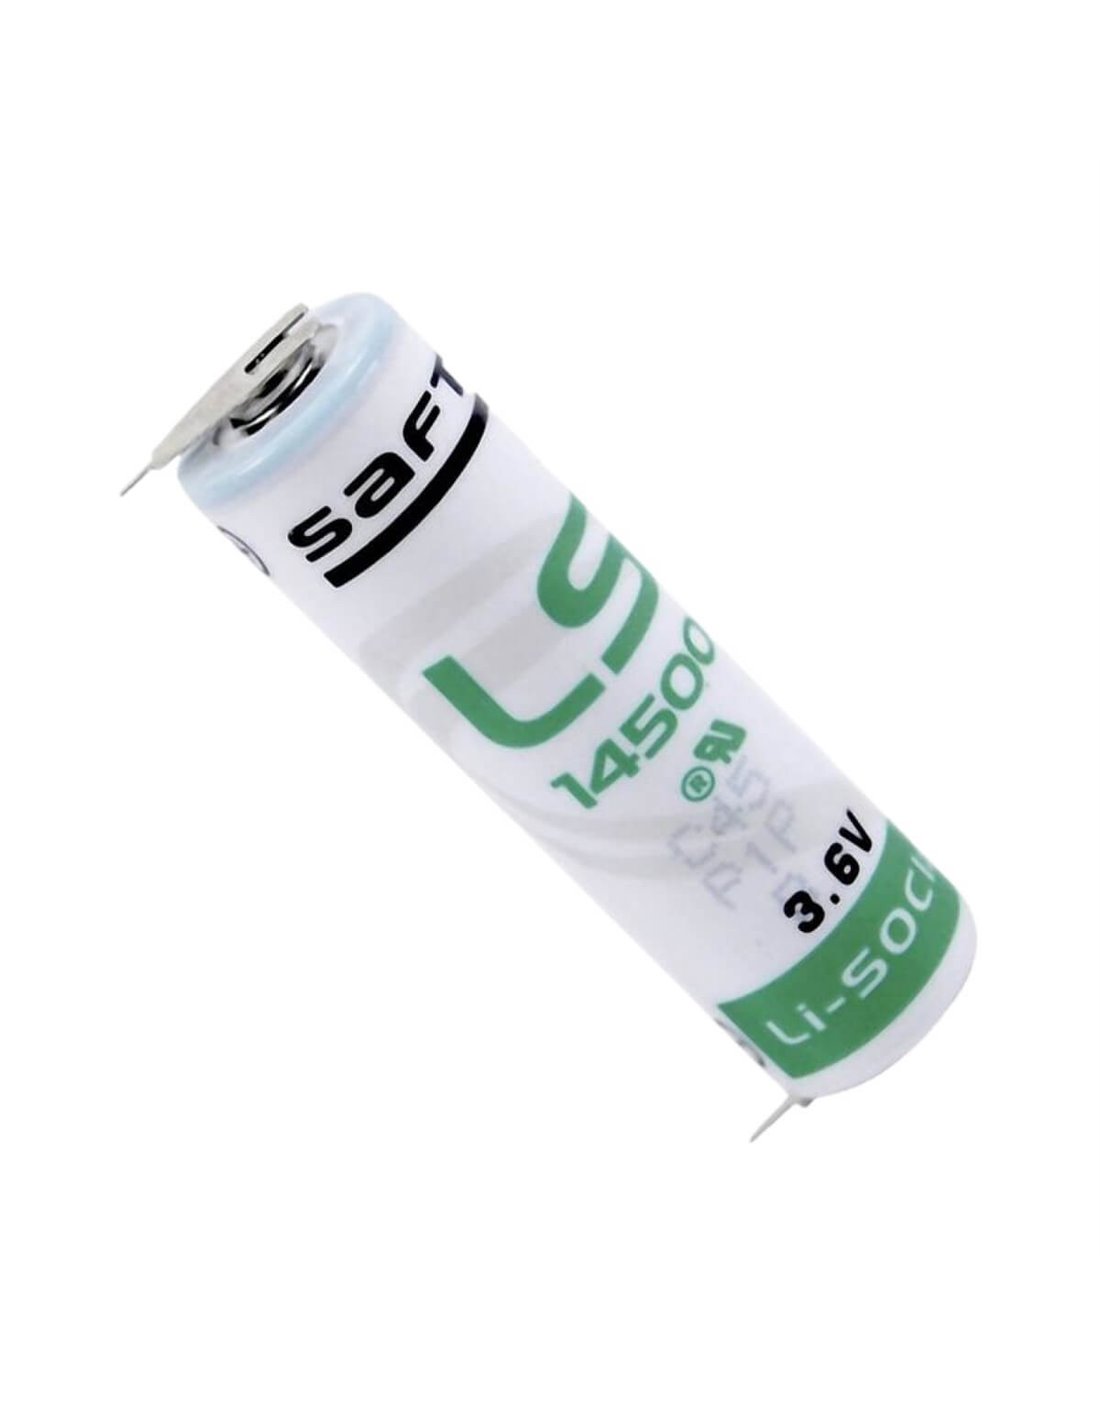 4 Pcs Brand New Genuine Saft LS14500 Battery AA 3.6 Volt Lithium Batteries  